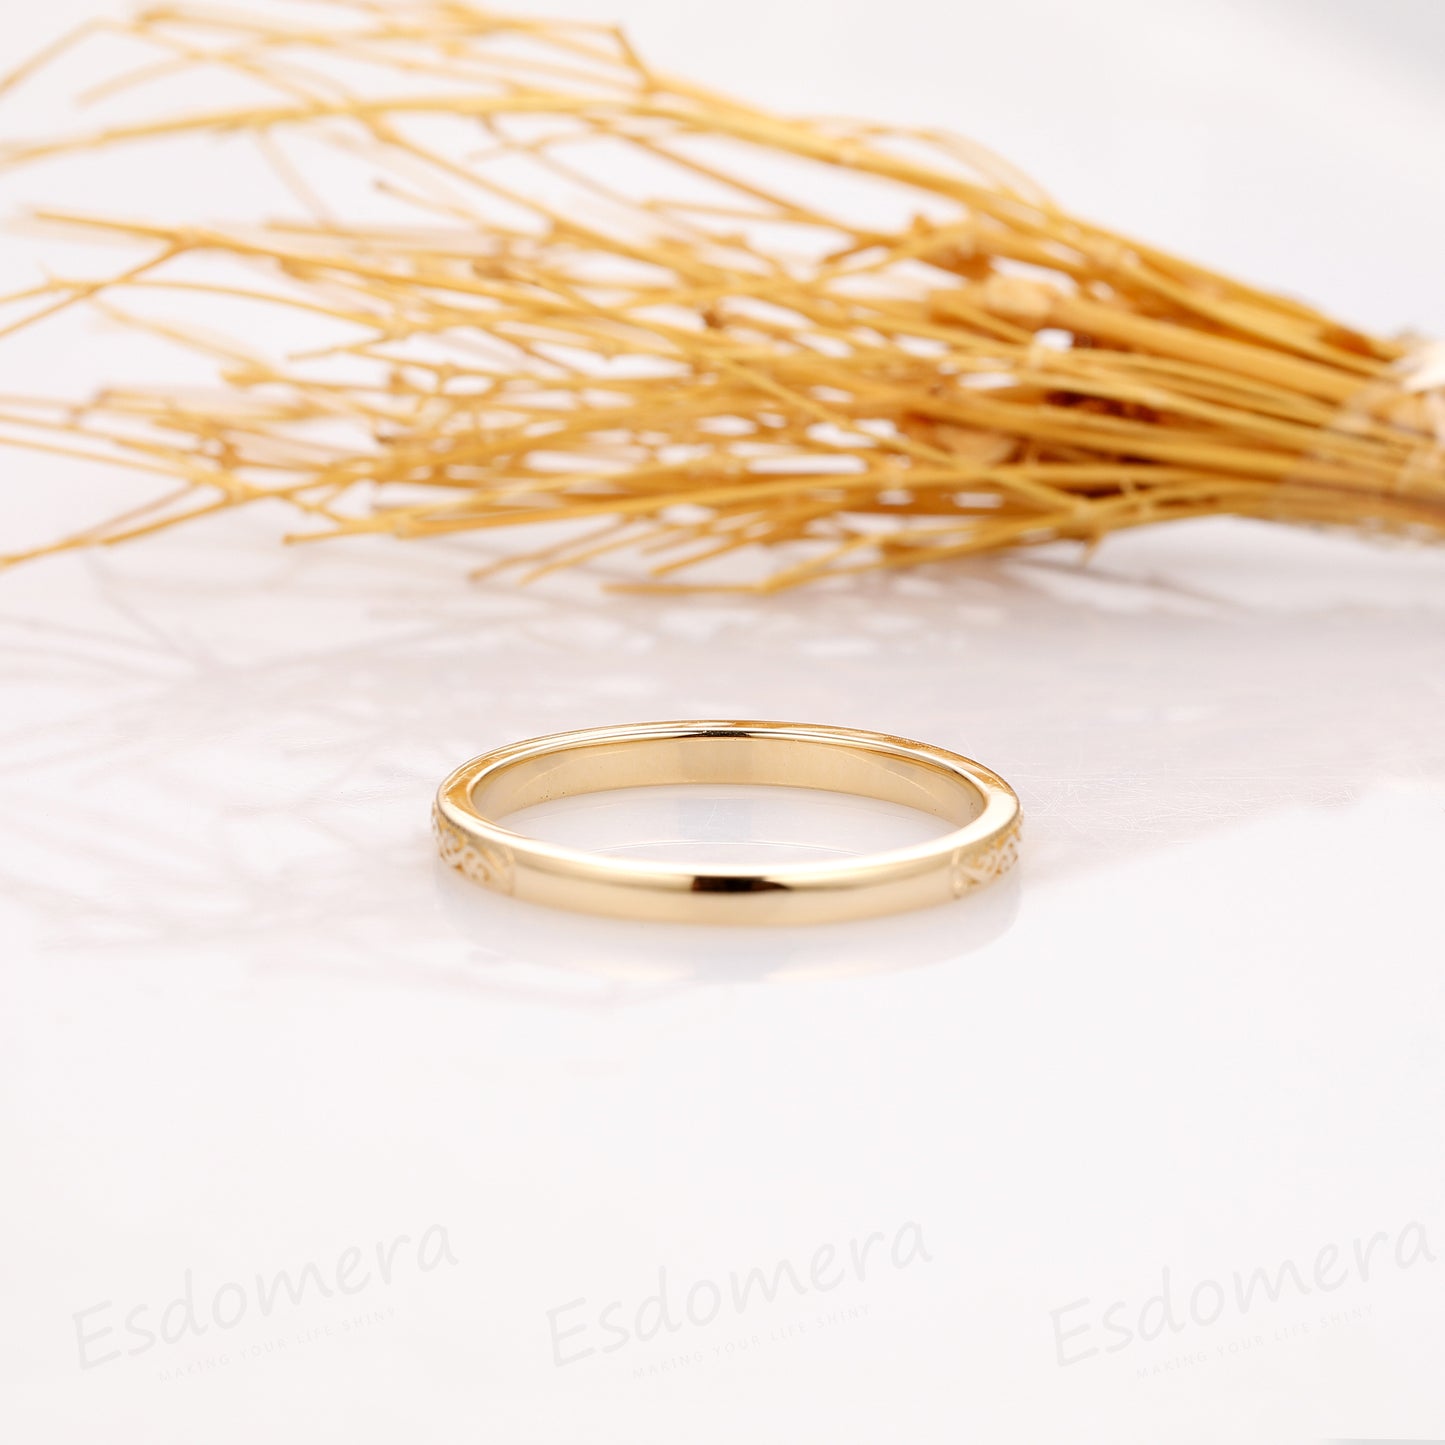 Solid 14k Yellow Gold Wedding Band, Matching Ring, Handmade Jewelry